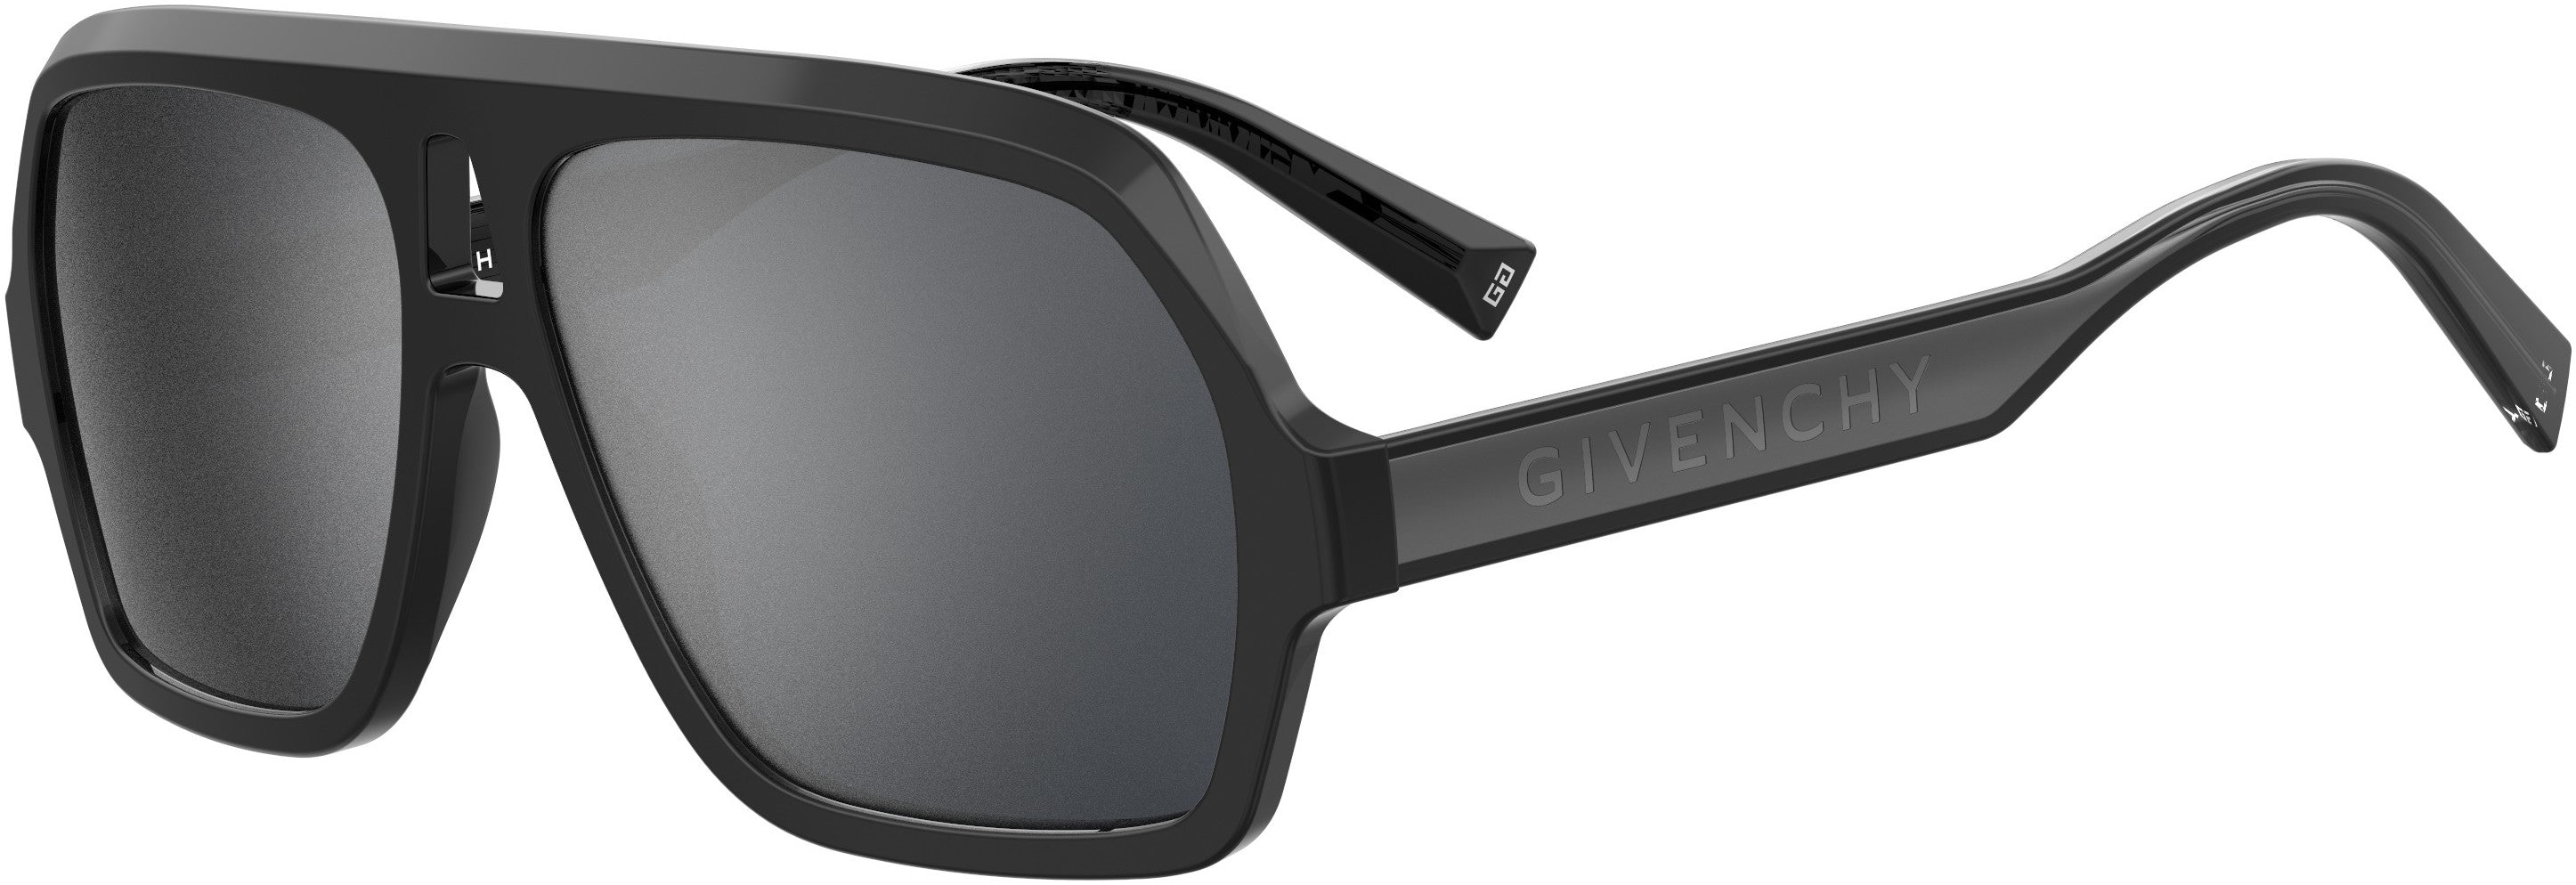  Givenchy 7200/S Navigator Sunglasses 0807-0807  Black (T4 Silver Mirror)